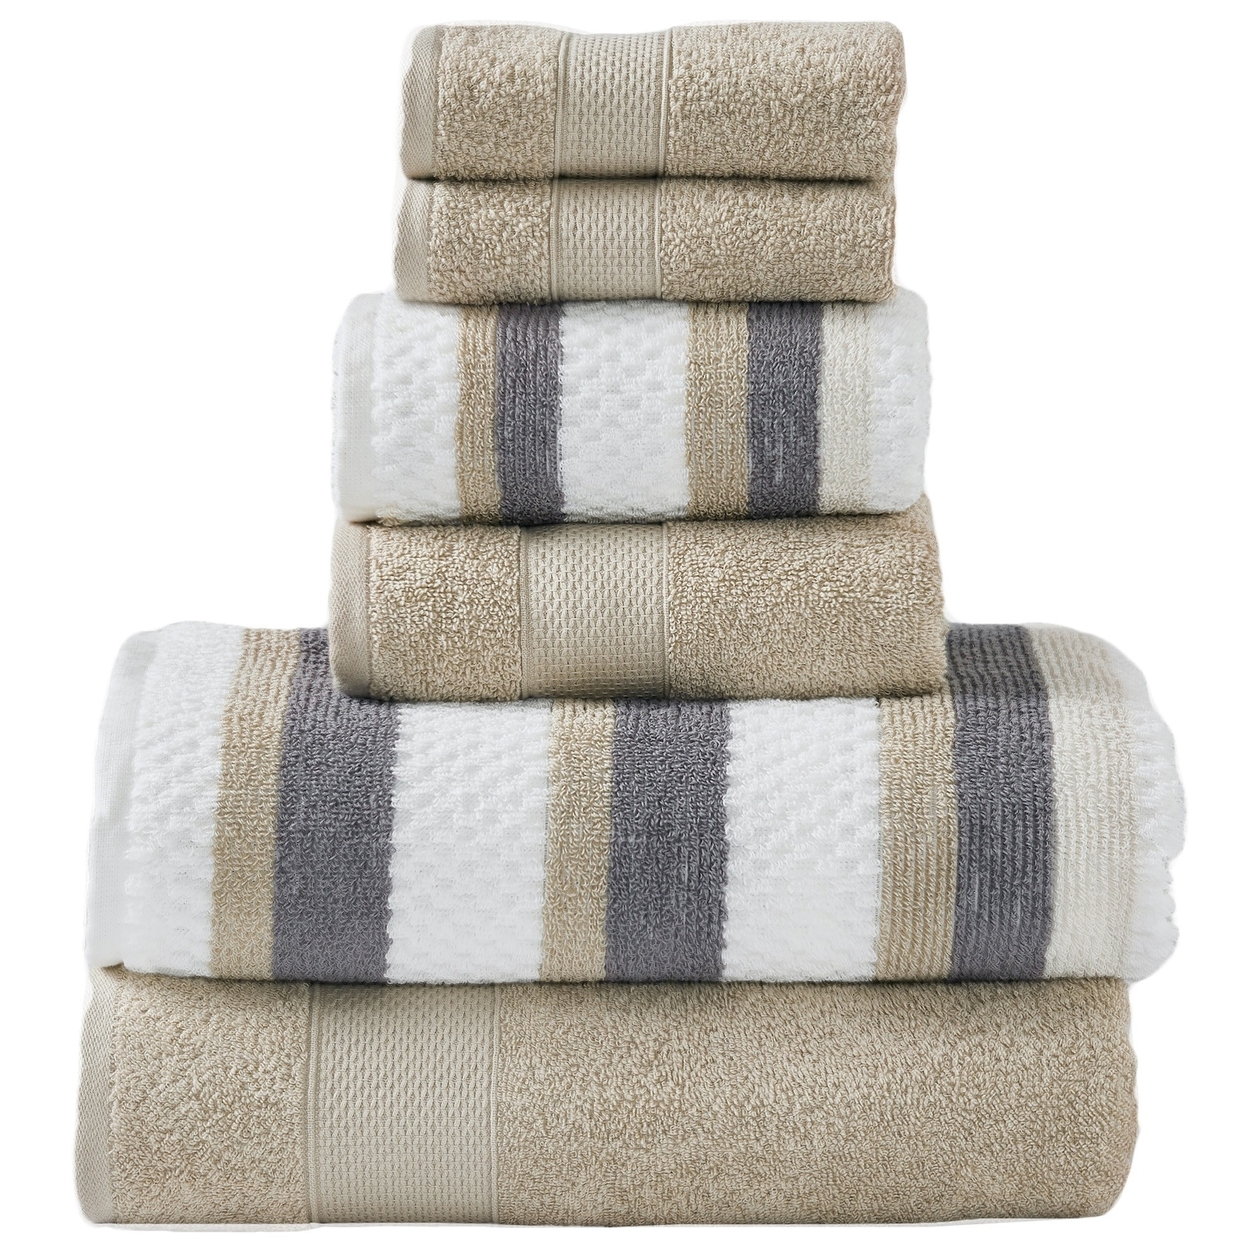 Nyx 6pc Soft Cotton Towel Set, Striped, White, Beige By The Urban Port- Saltoro Sherpi